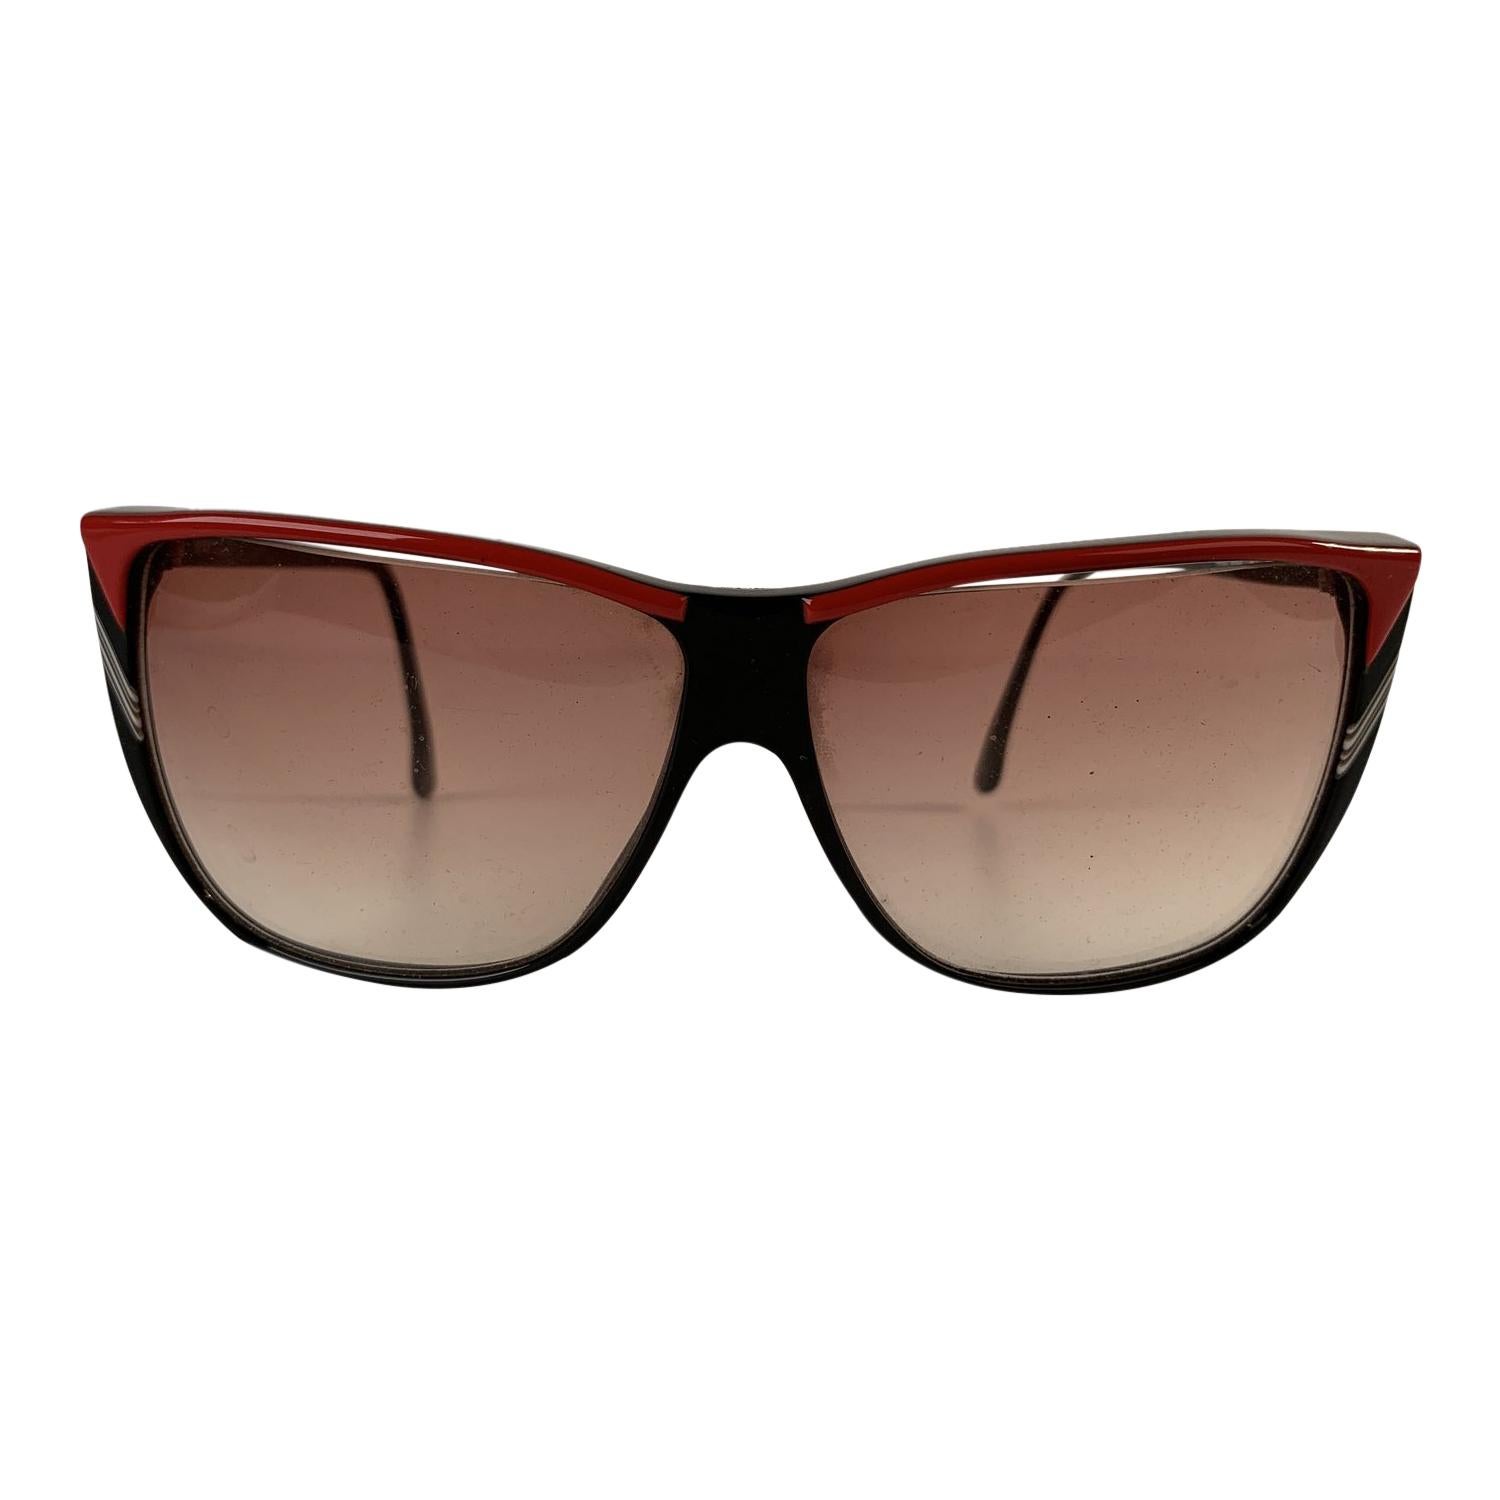 Roberta di Camerino Vintage schwarz-rote quadratische Sonnenbrille R56